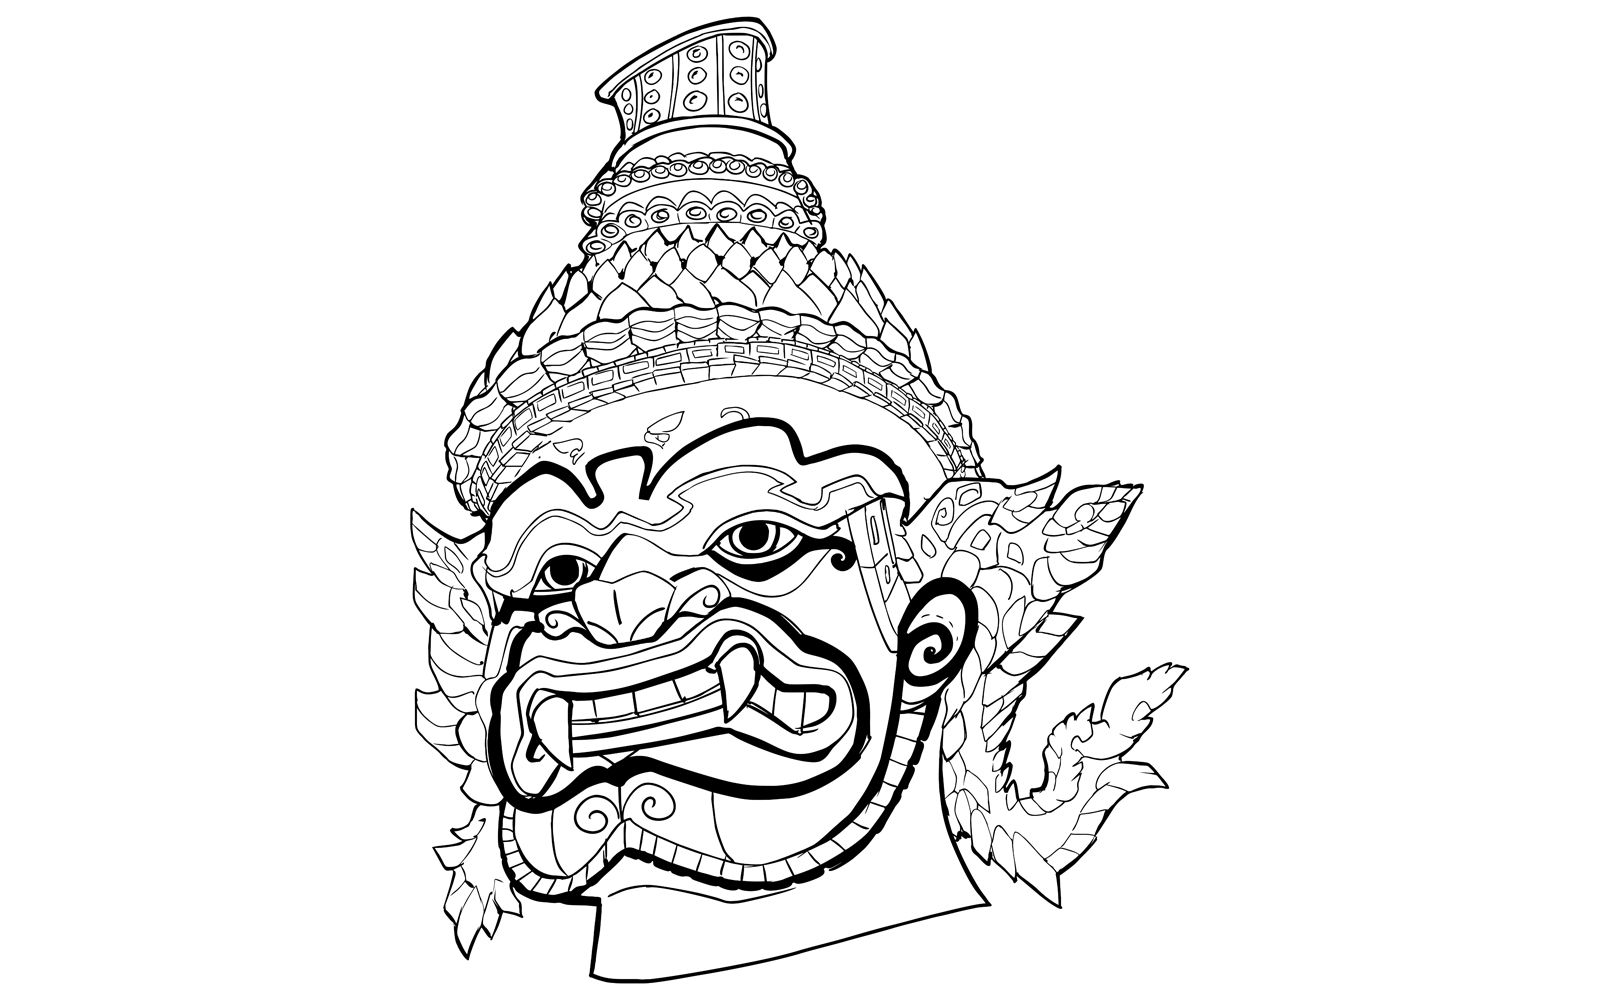 Thai Demon Line Art - Illustration